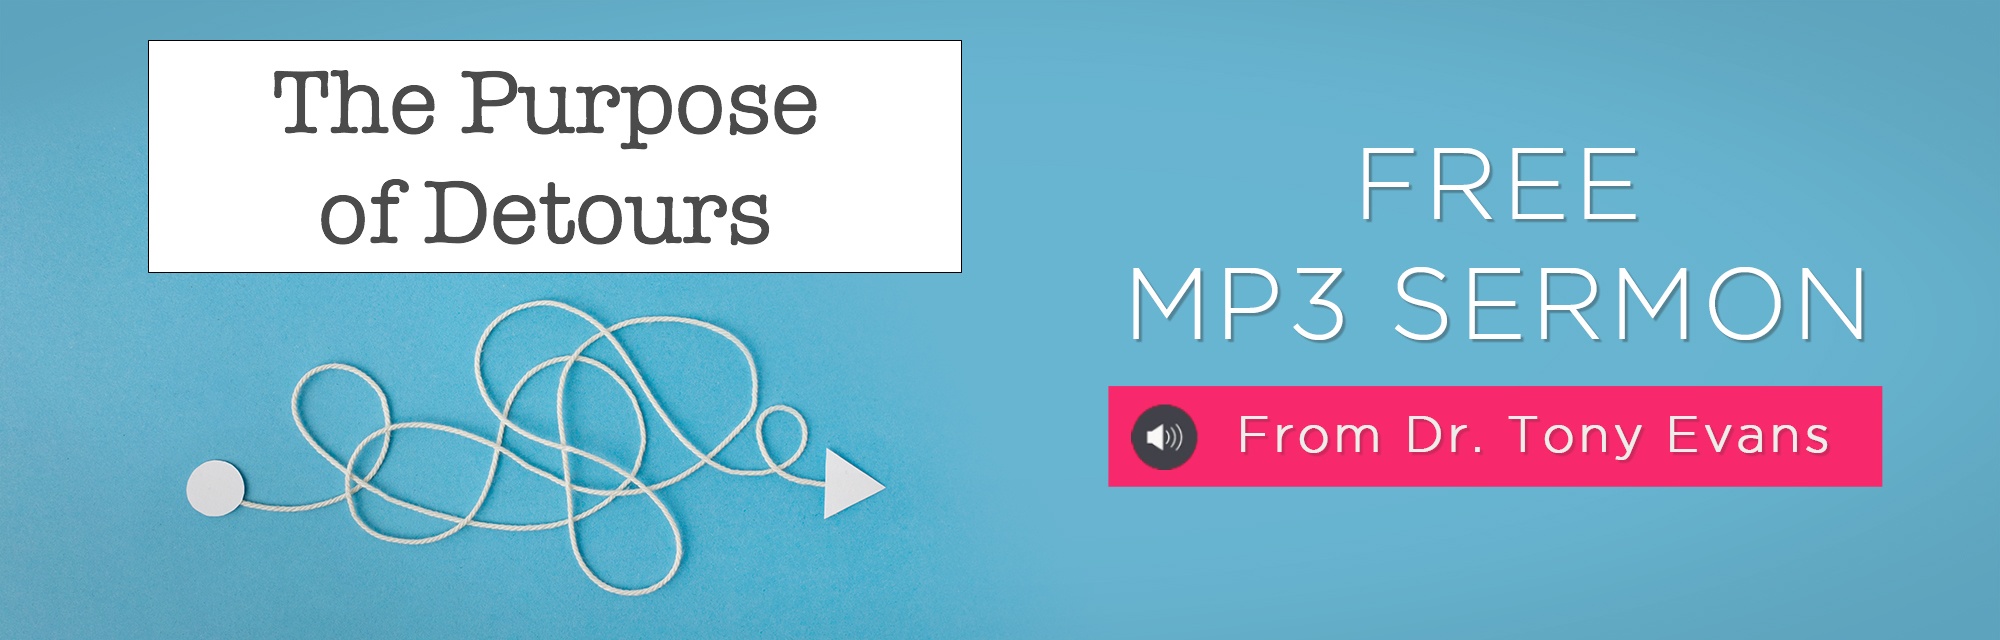 Purpose Detours MP3